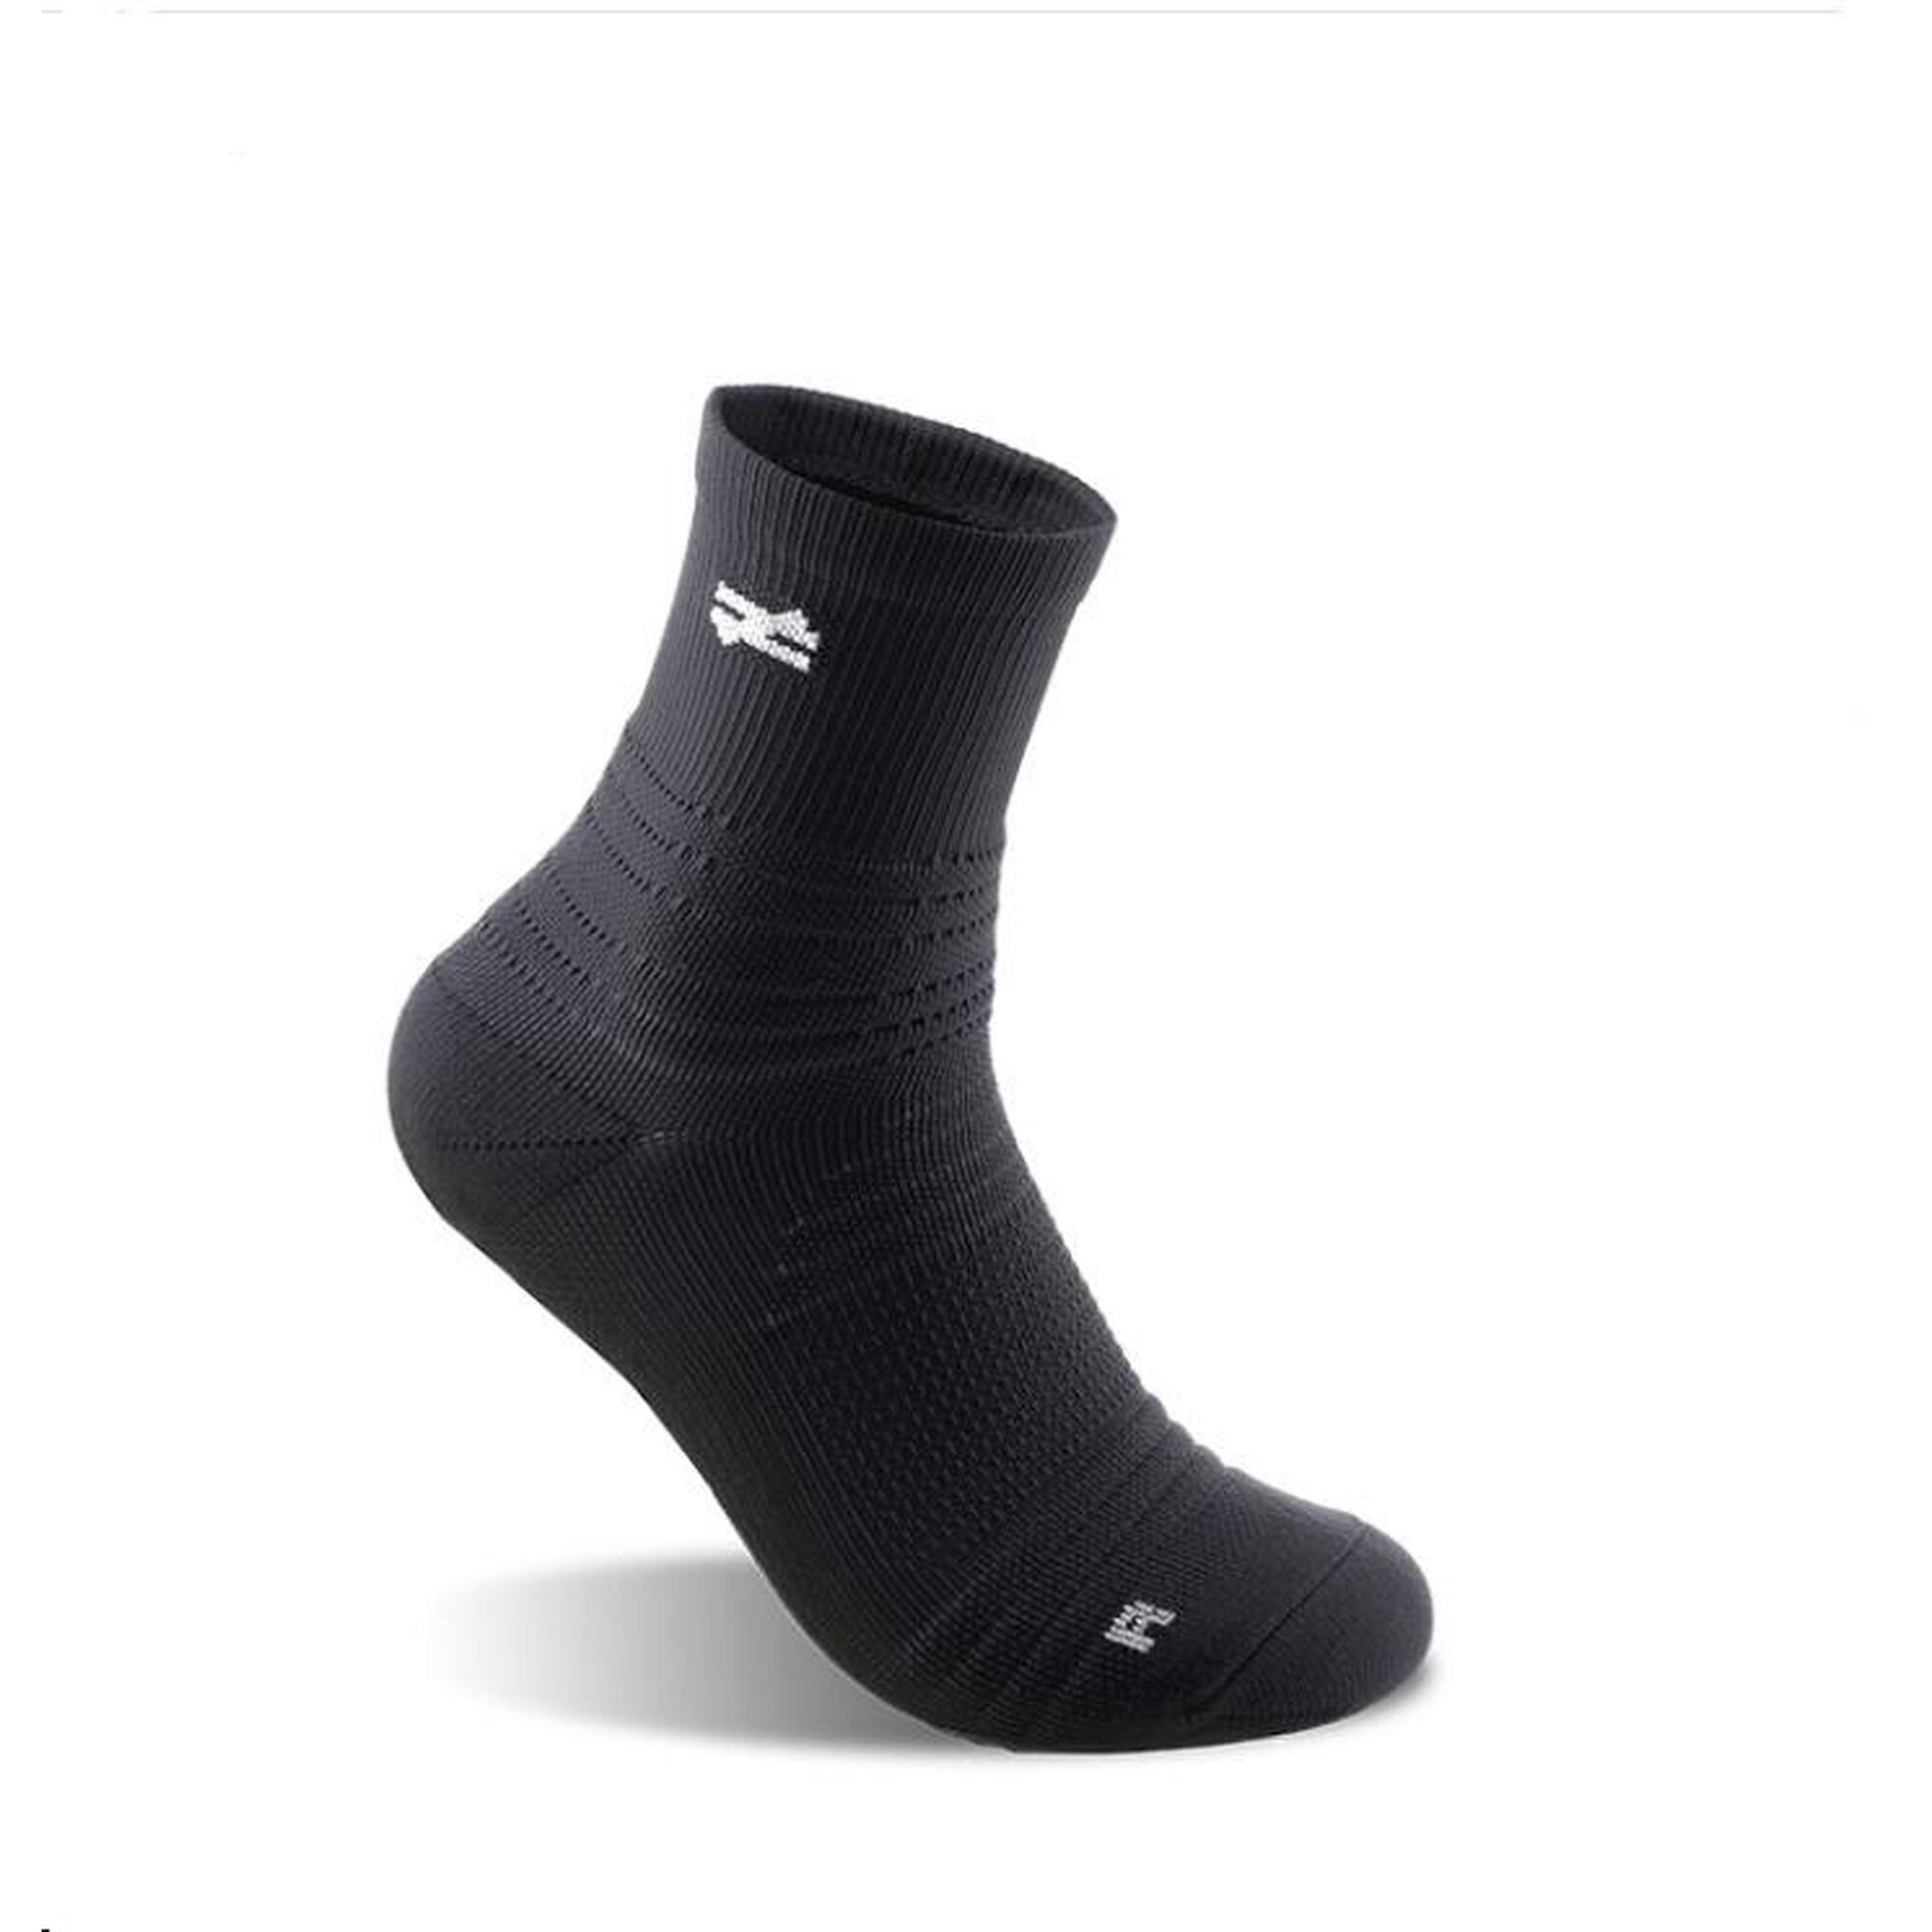 G-ZOX Zero Sports Socks (3 pack) - Black